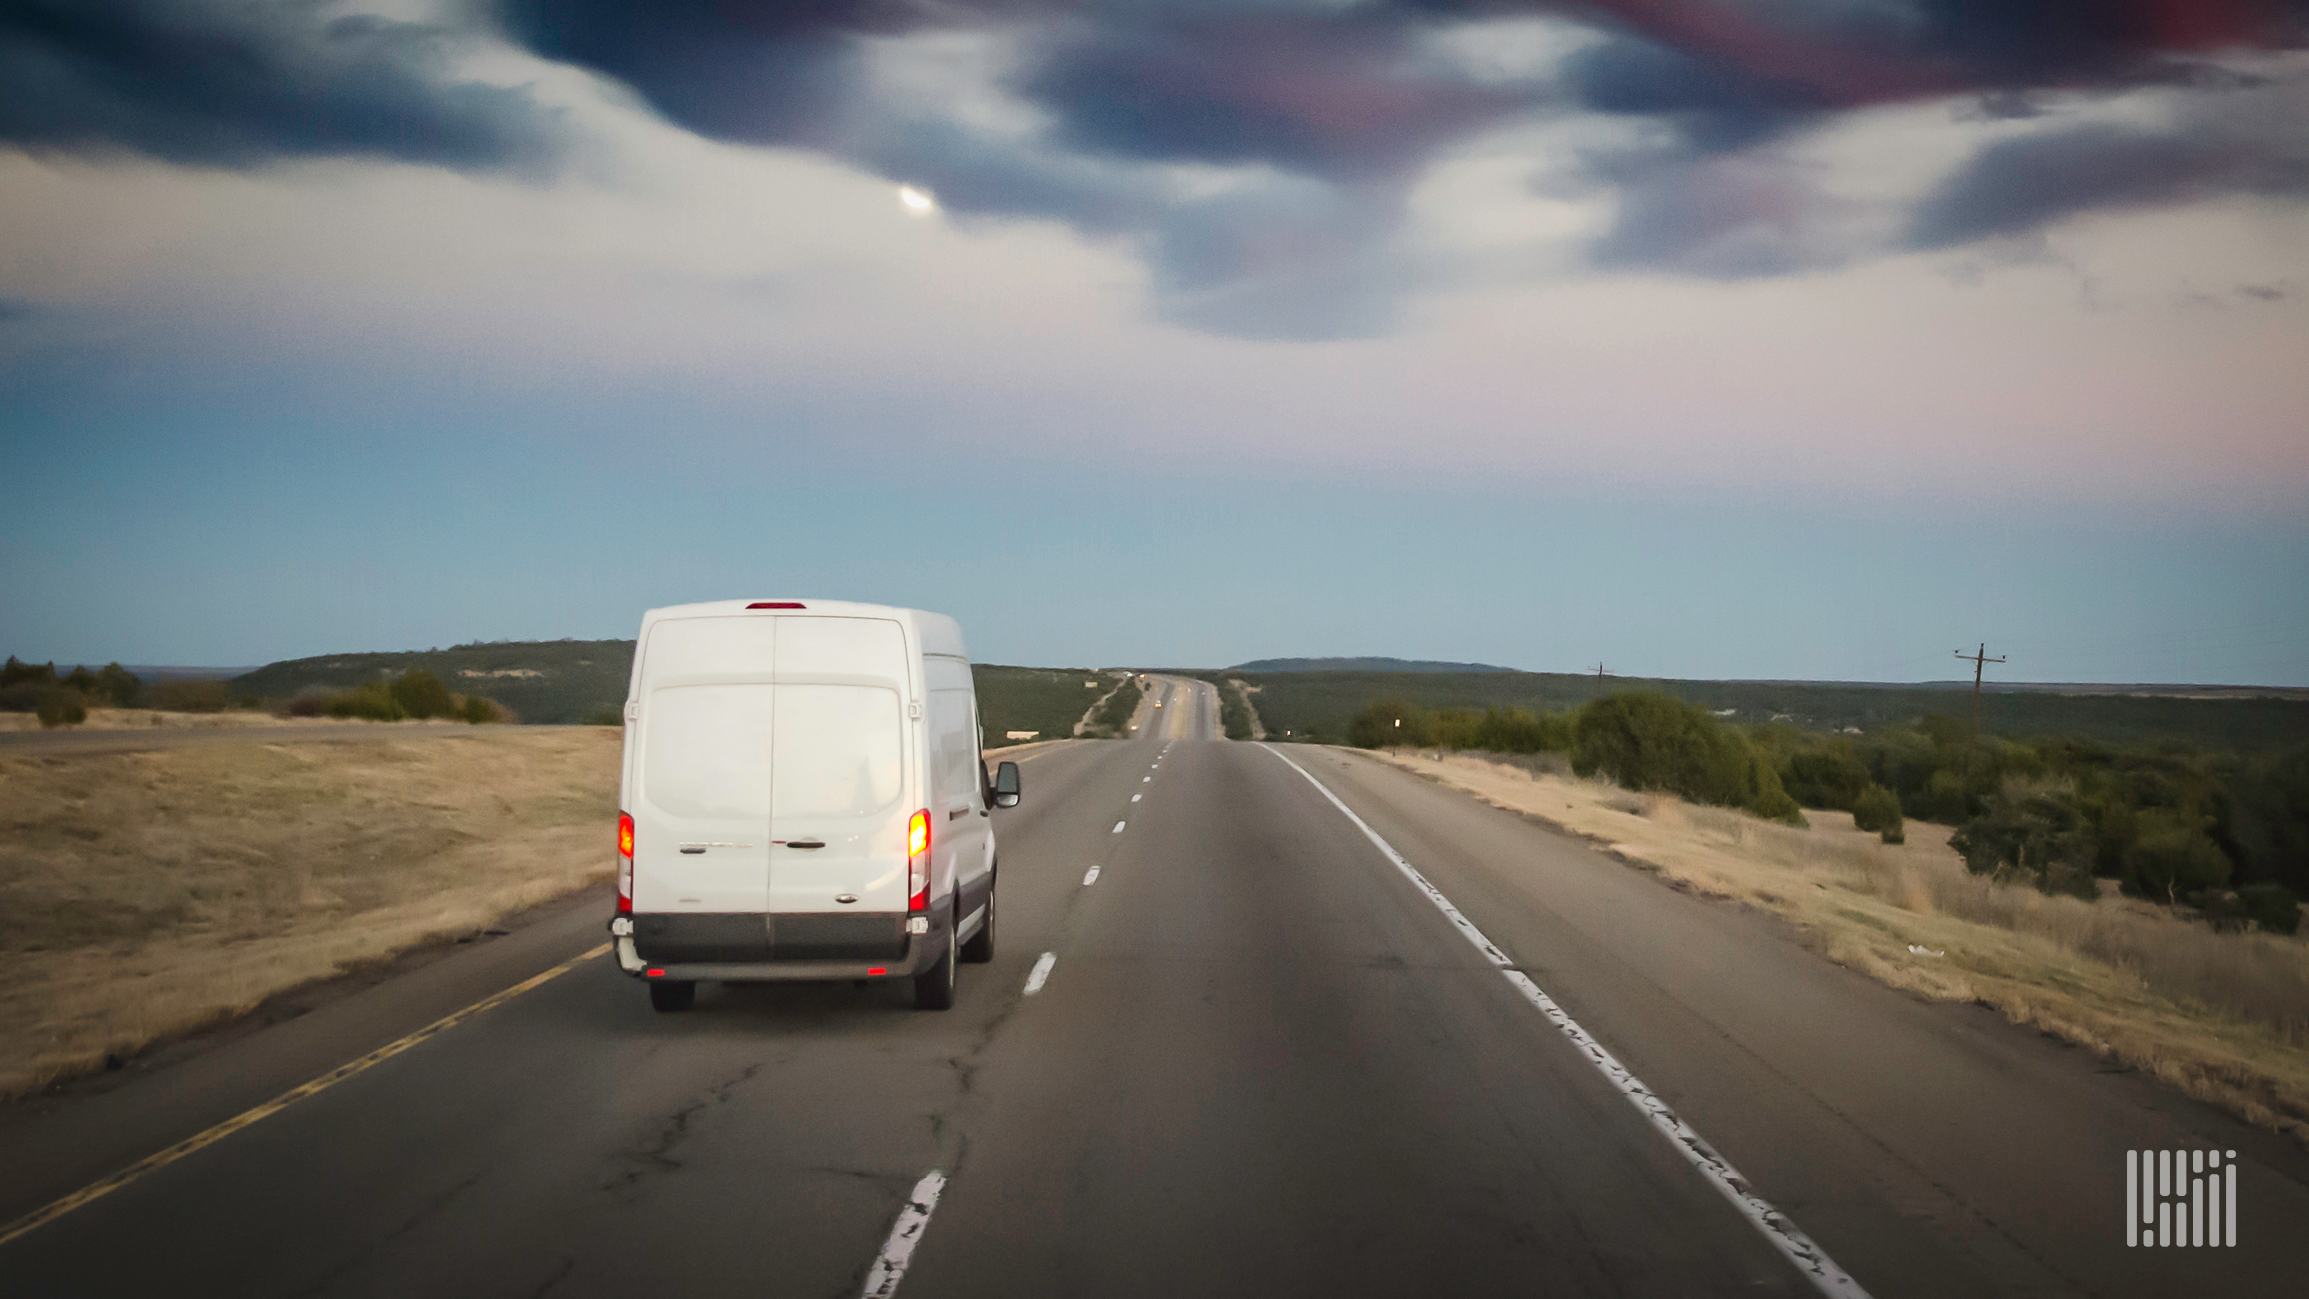 White van on highway at sunset